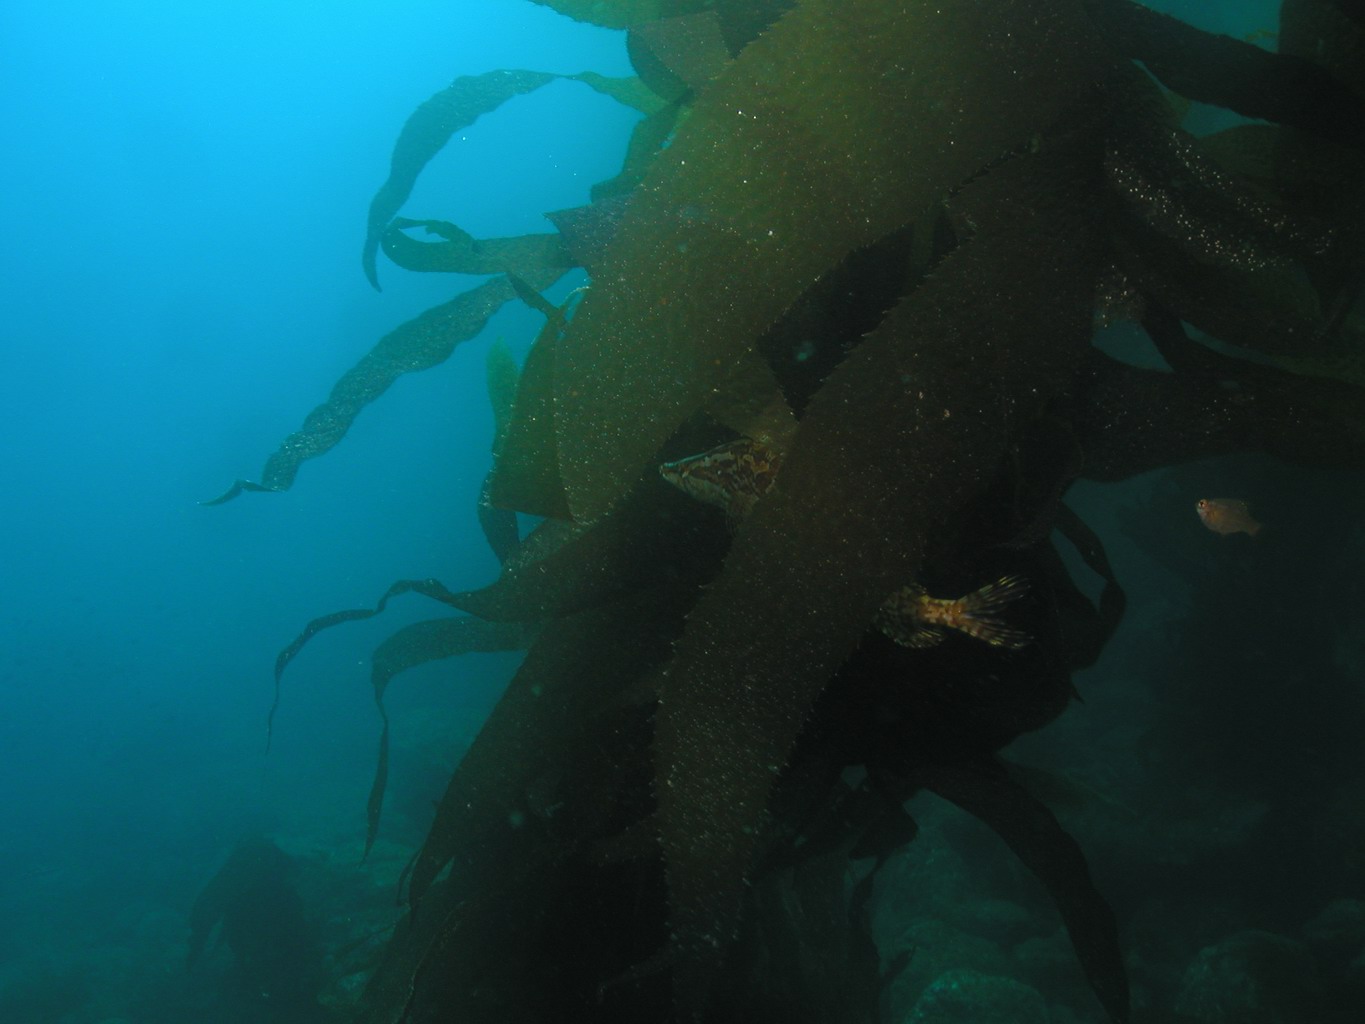 kelpfish hiding in the kelp